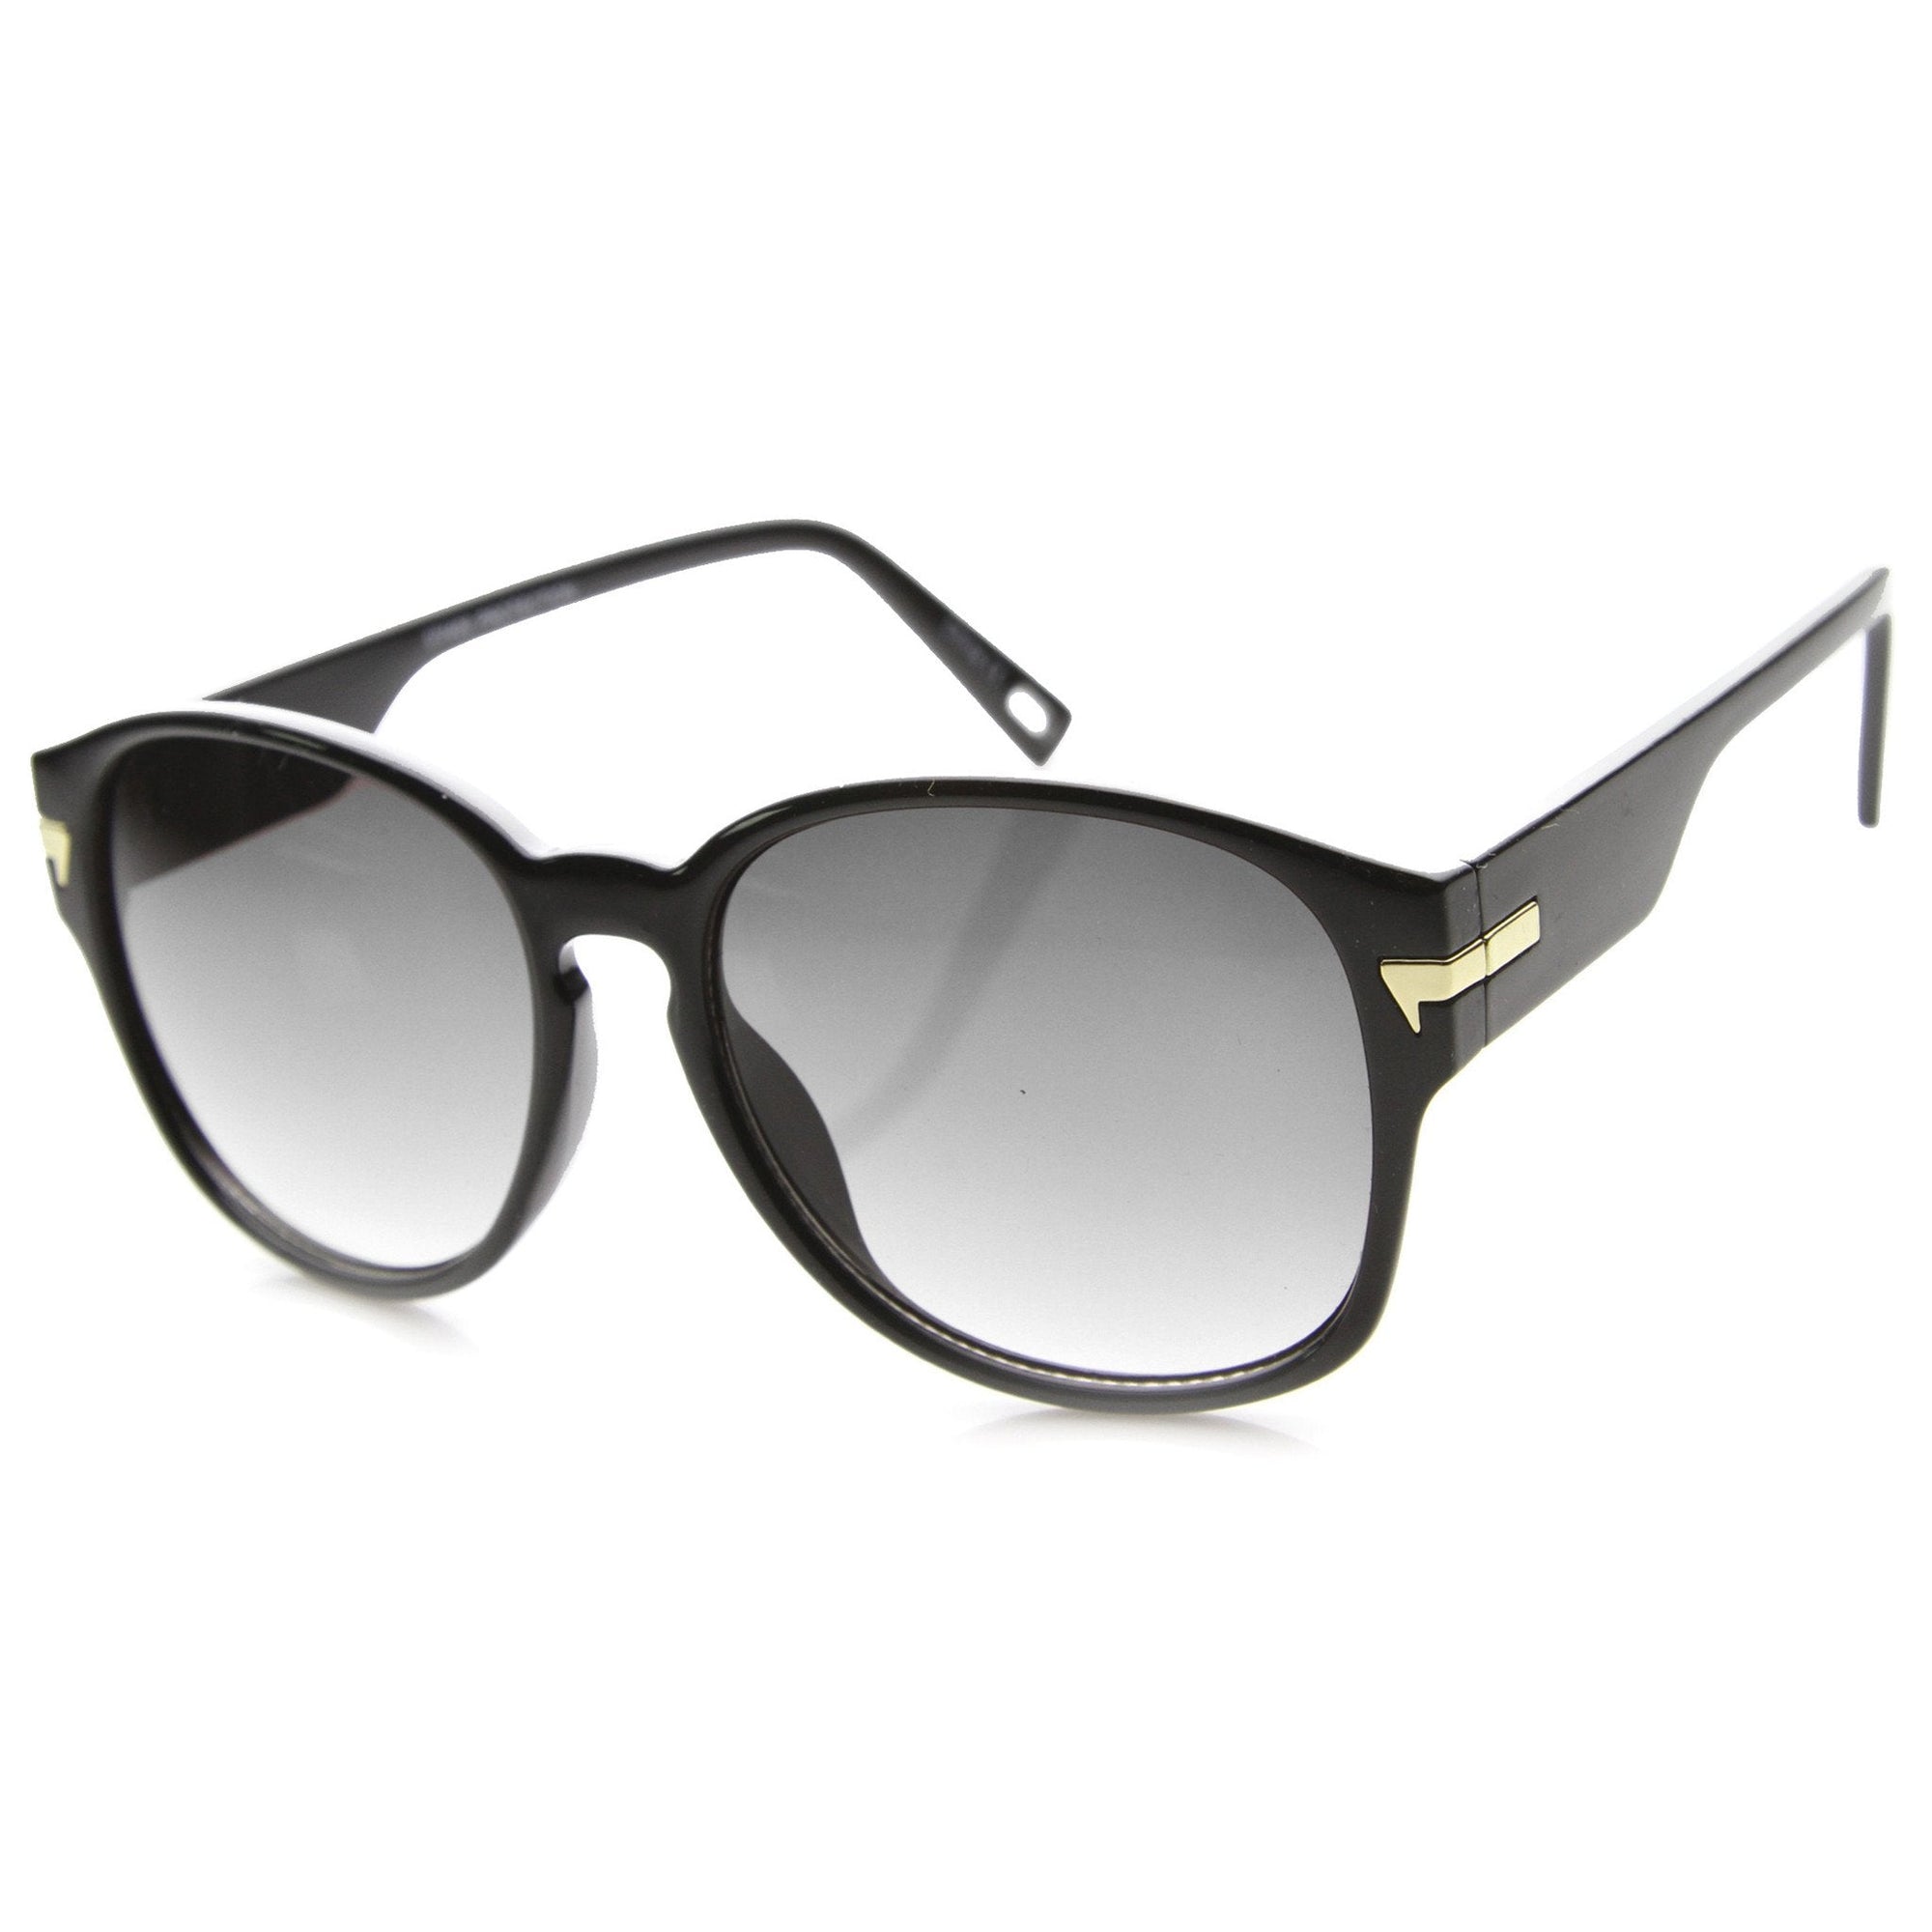 Women's Trendy Oversize P3 Sunglasses 9825